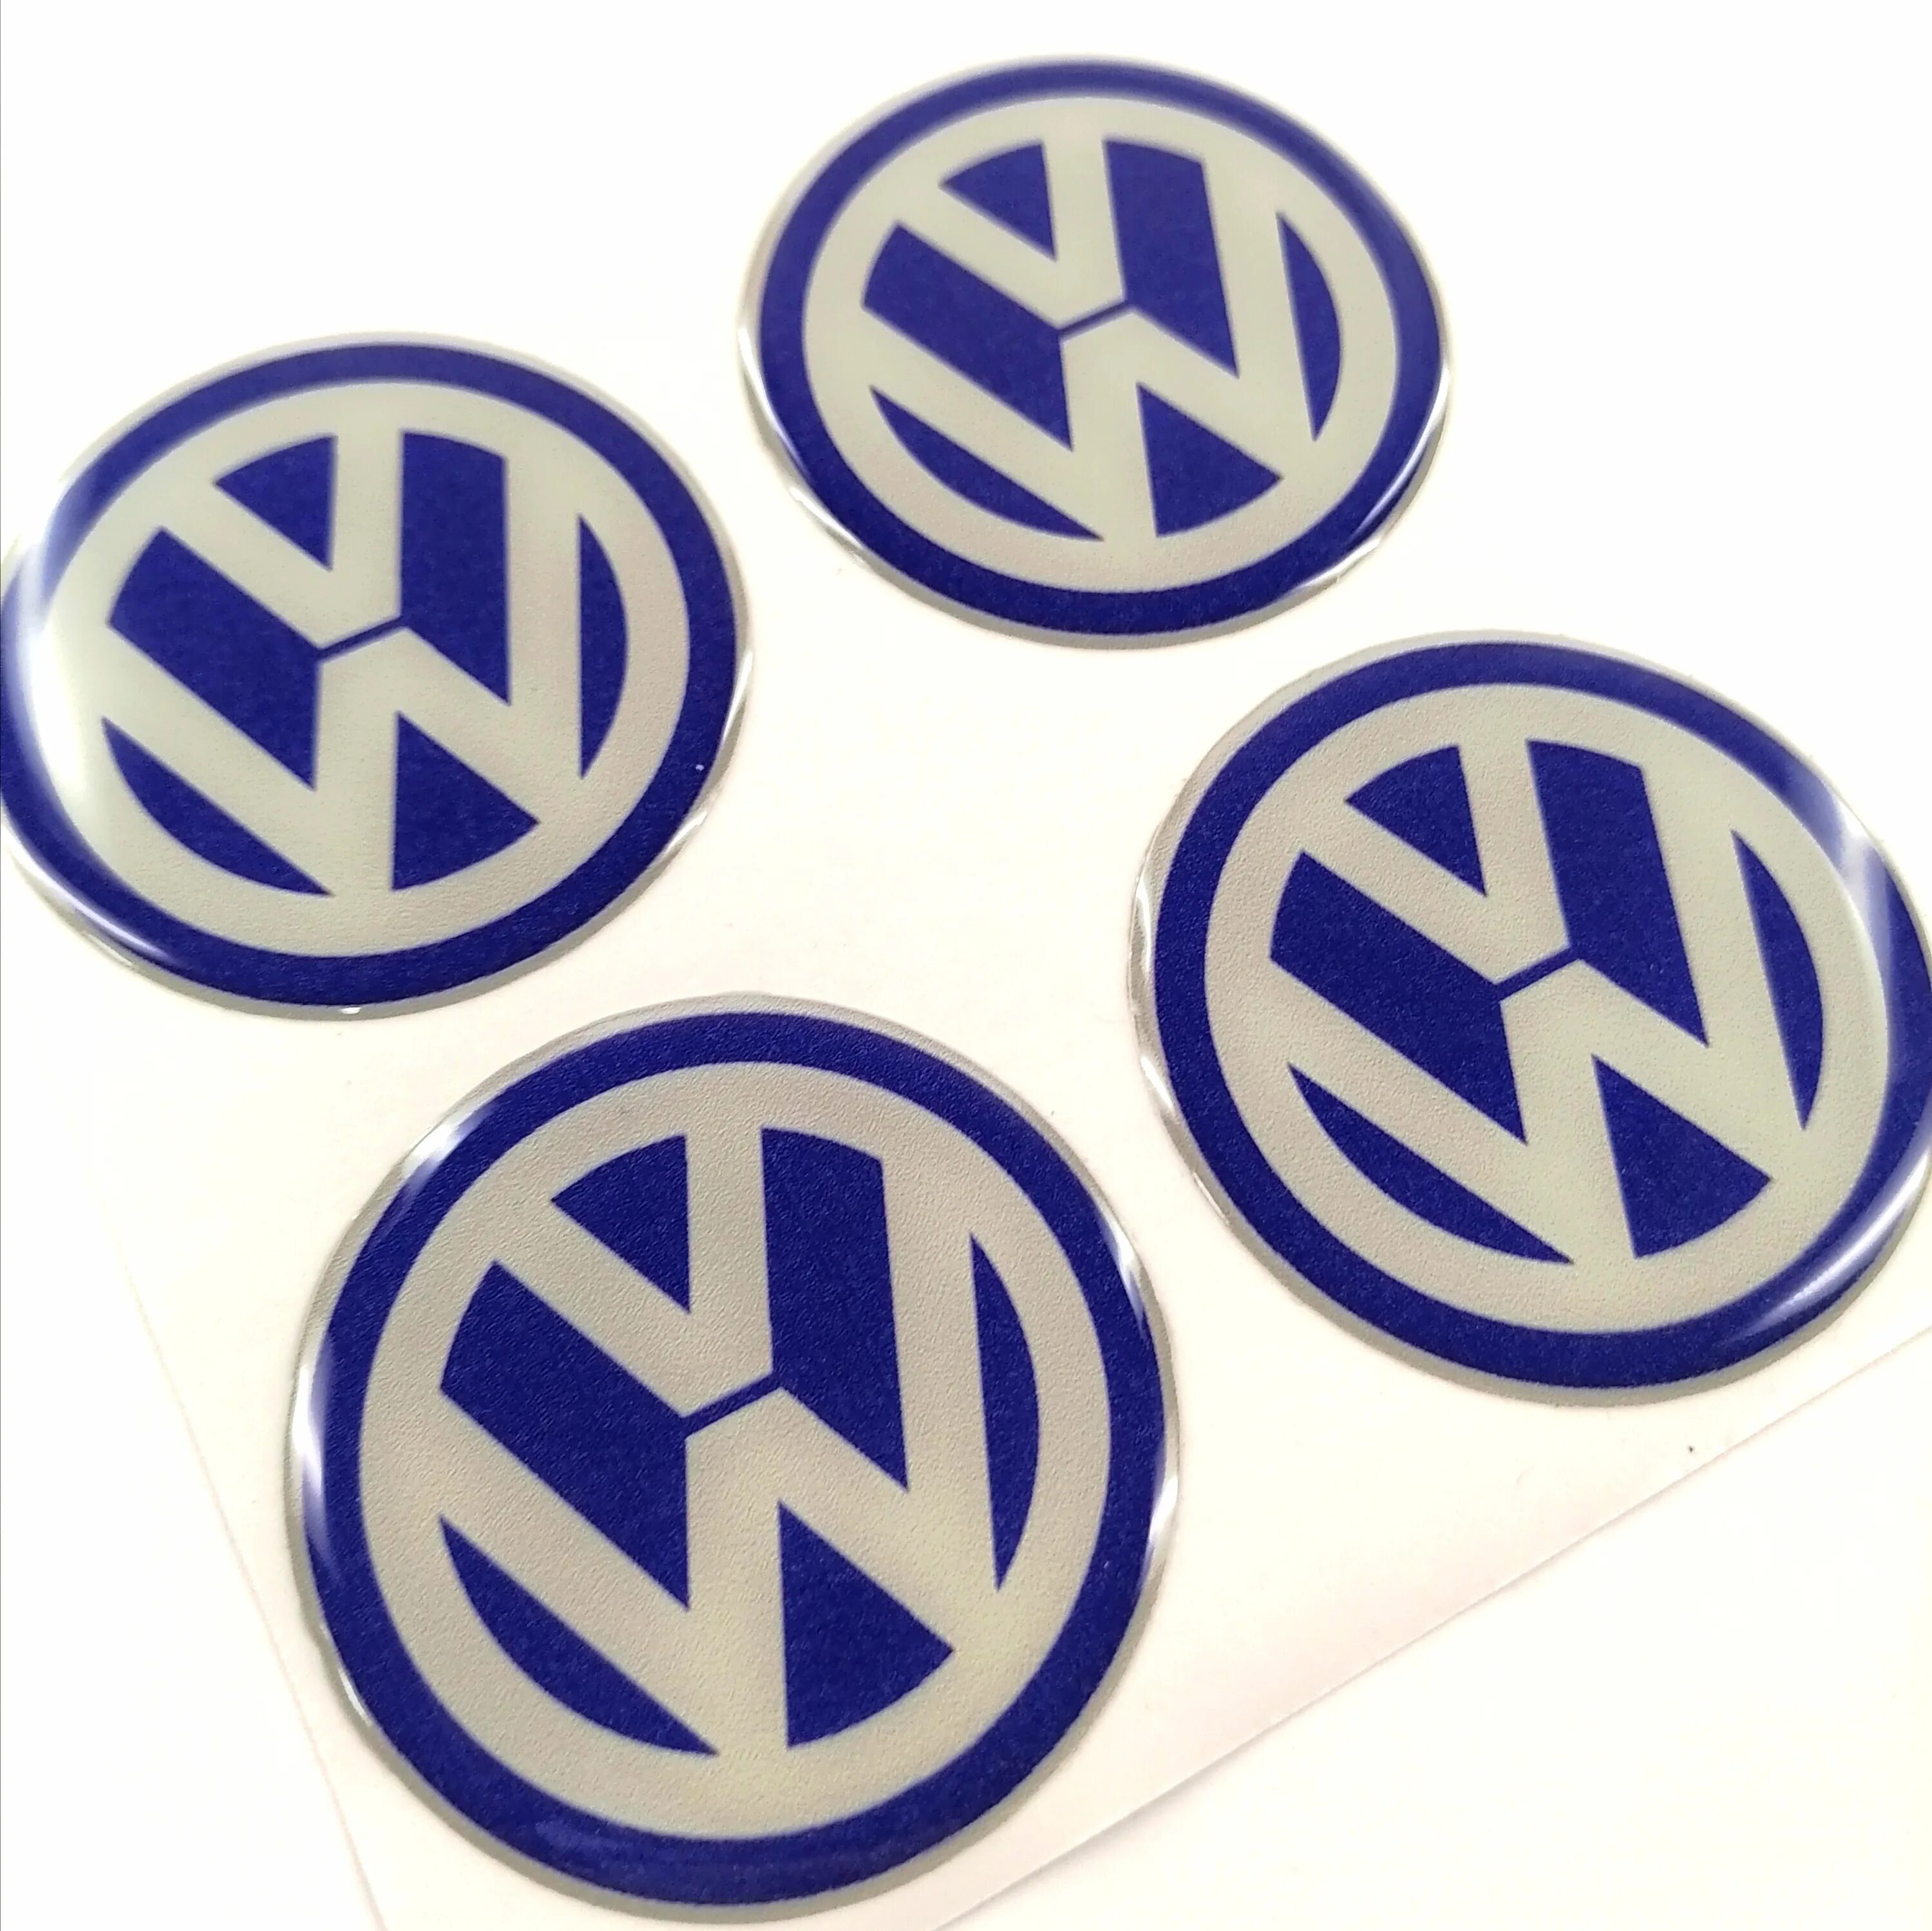 Наклейка volkswagen. Колпачок диска Фольксваген 76 мм. Наклейка на авто "Фольксваген". Наклейки на колпачки Volkswagen. Логотип VW на диски.